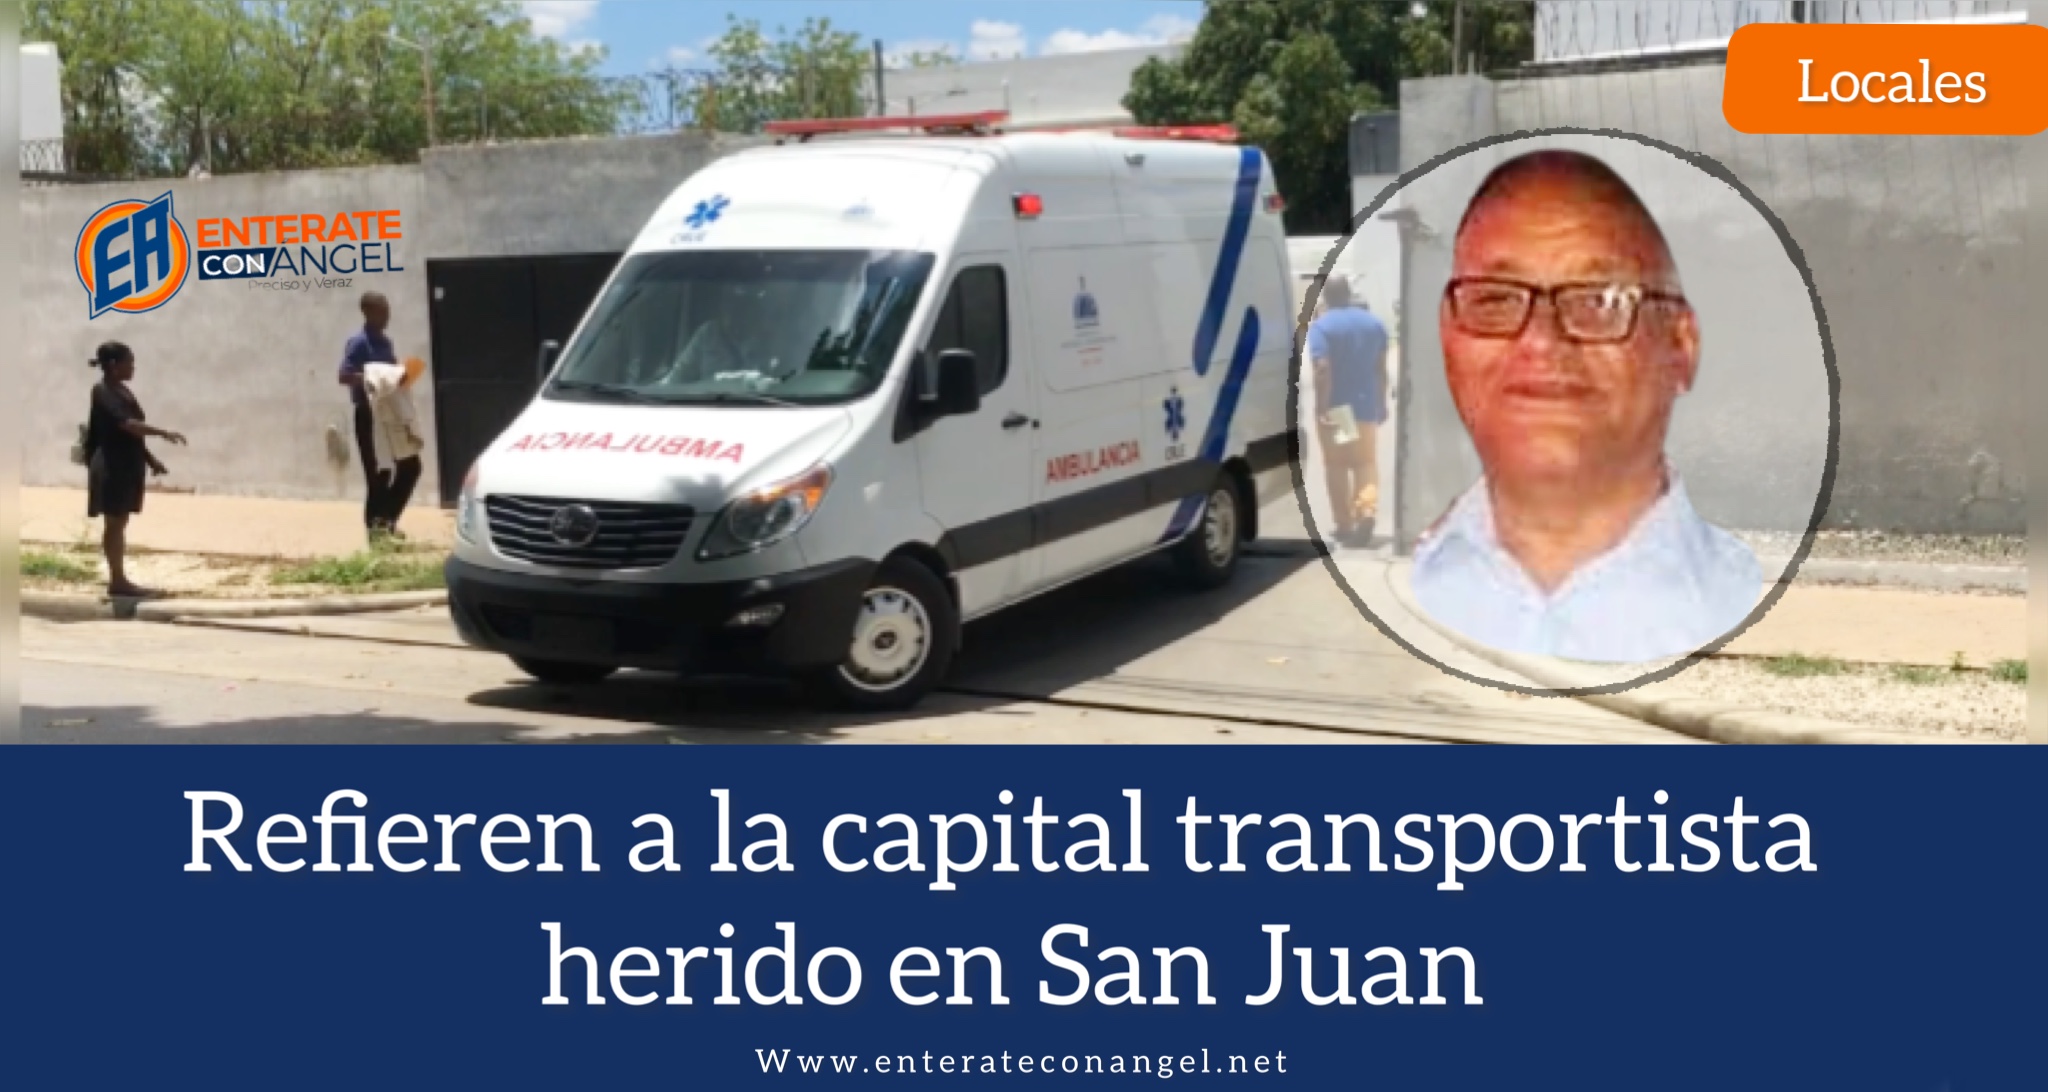 Refieren a la capital transportista herido durante enfrenamiento a tiros en San Juan